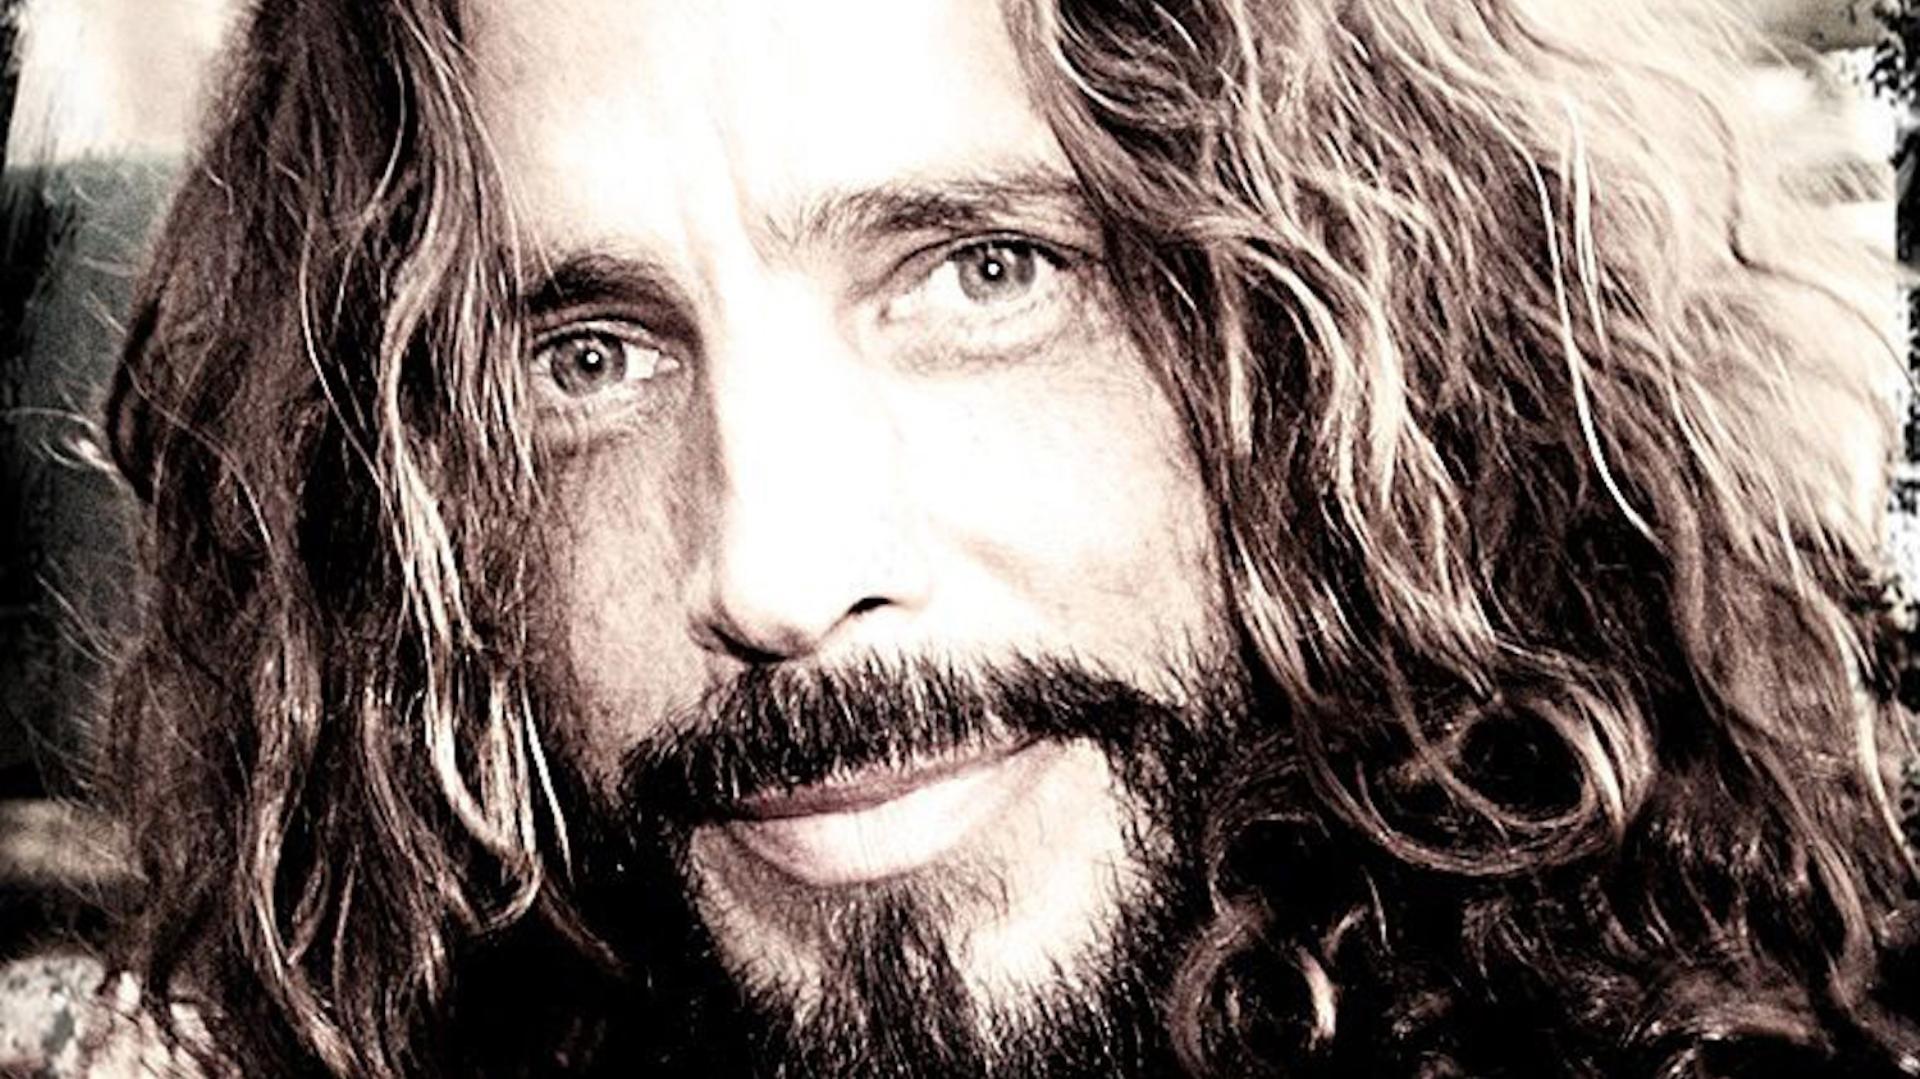 Chris Cornell, vocalista do Soundgarden e do Audioslave, morre nos